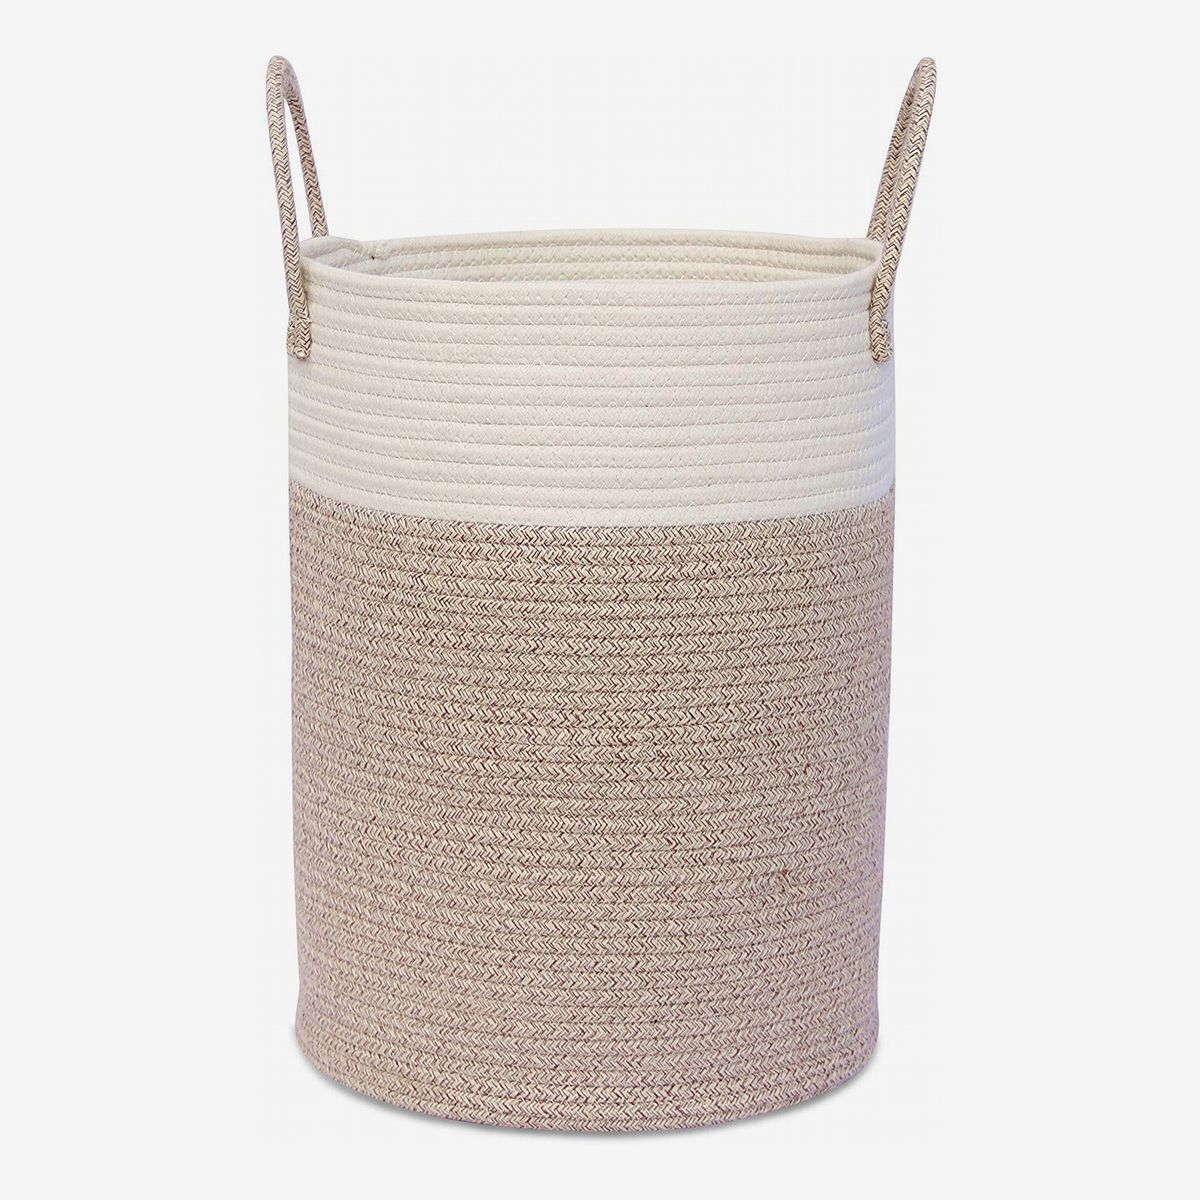 baby cloth basket buy online